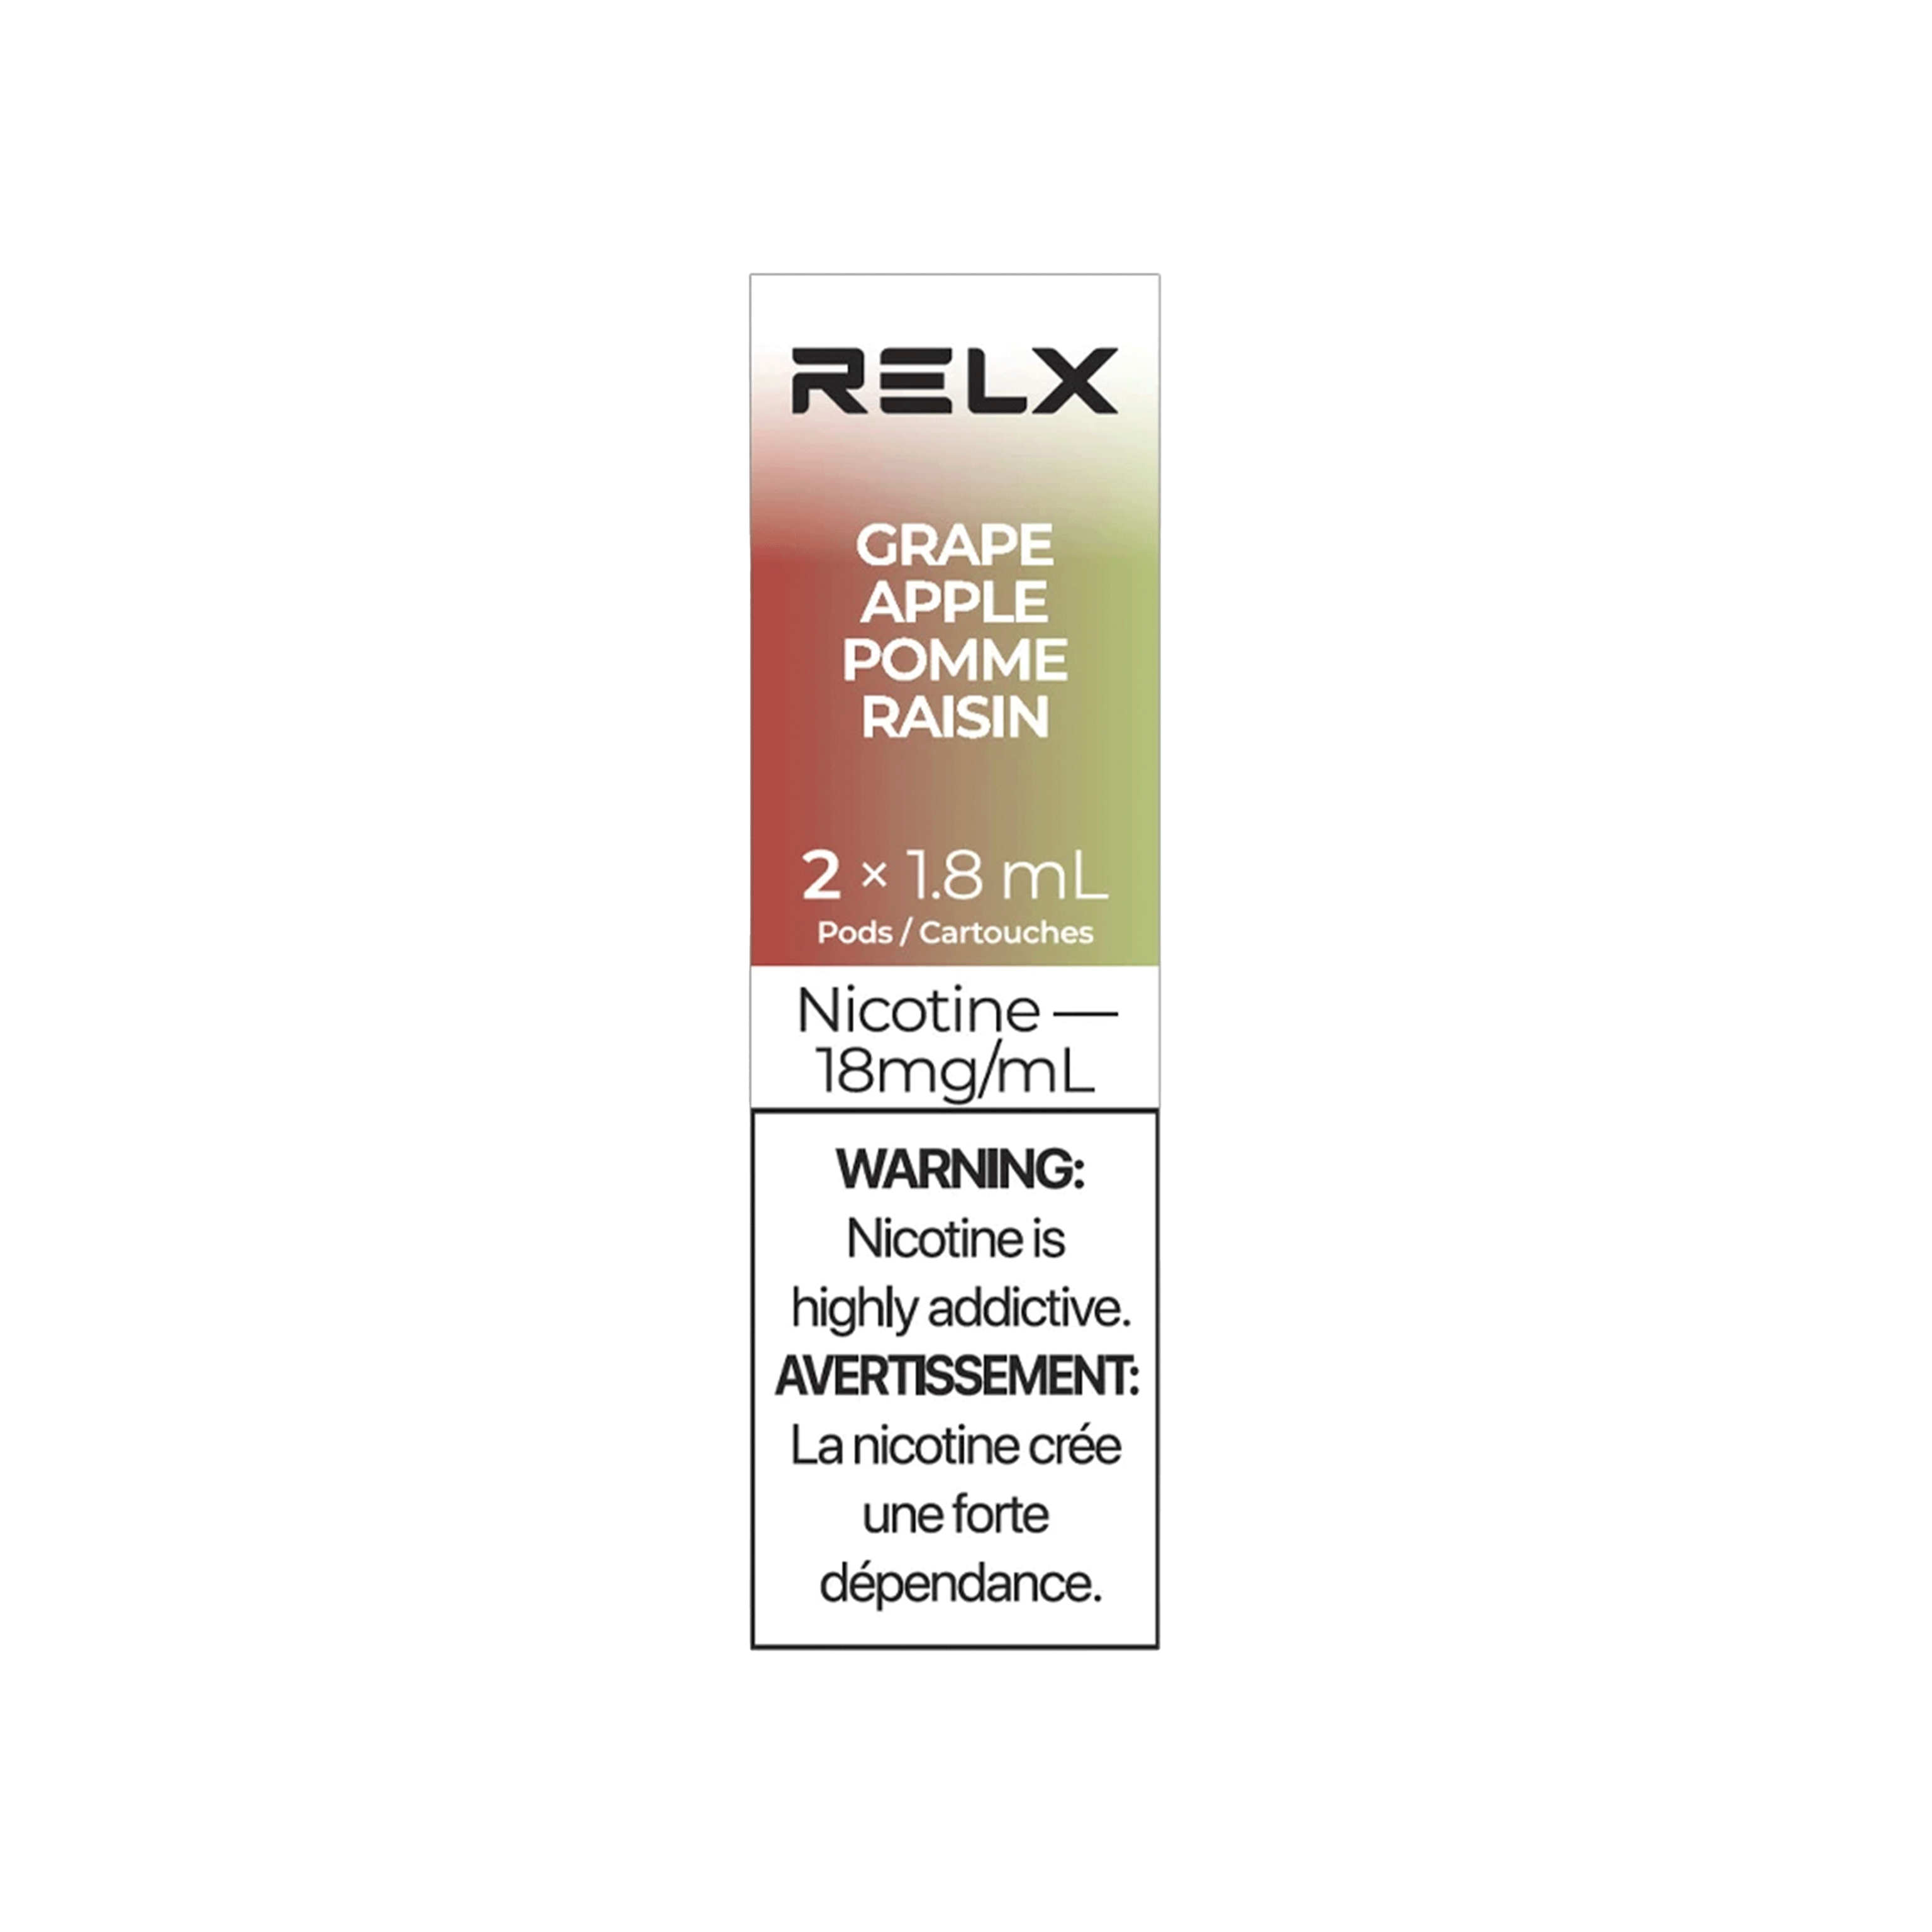 RELX Pro Vape Pod - Grape Apple available on Canada online vape shop